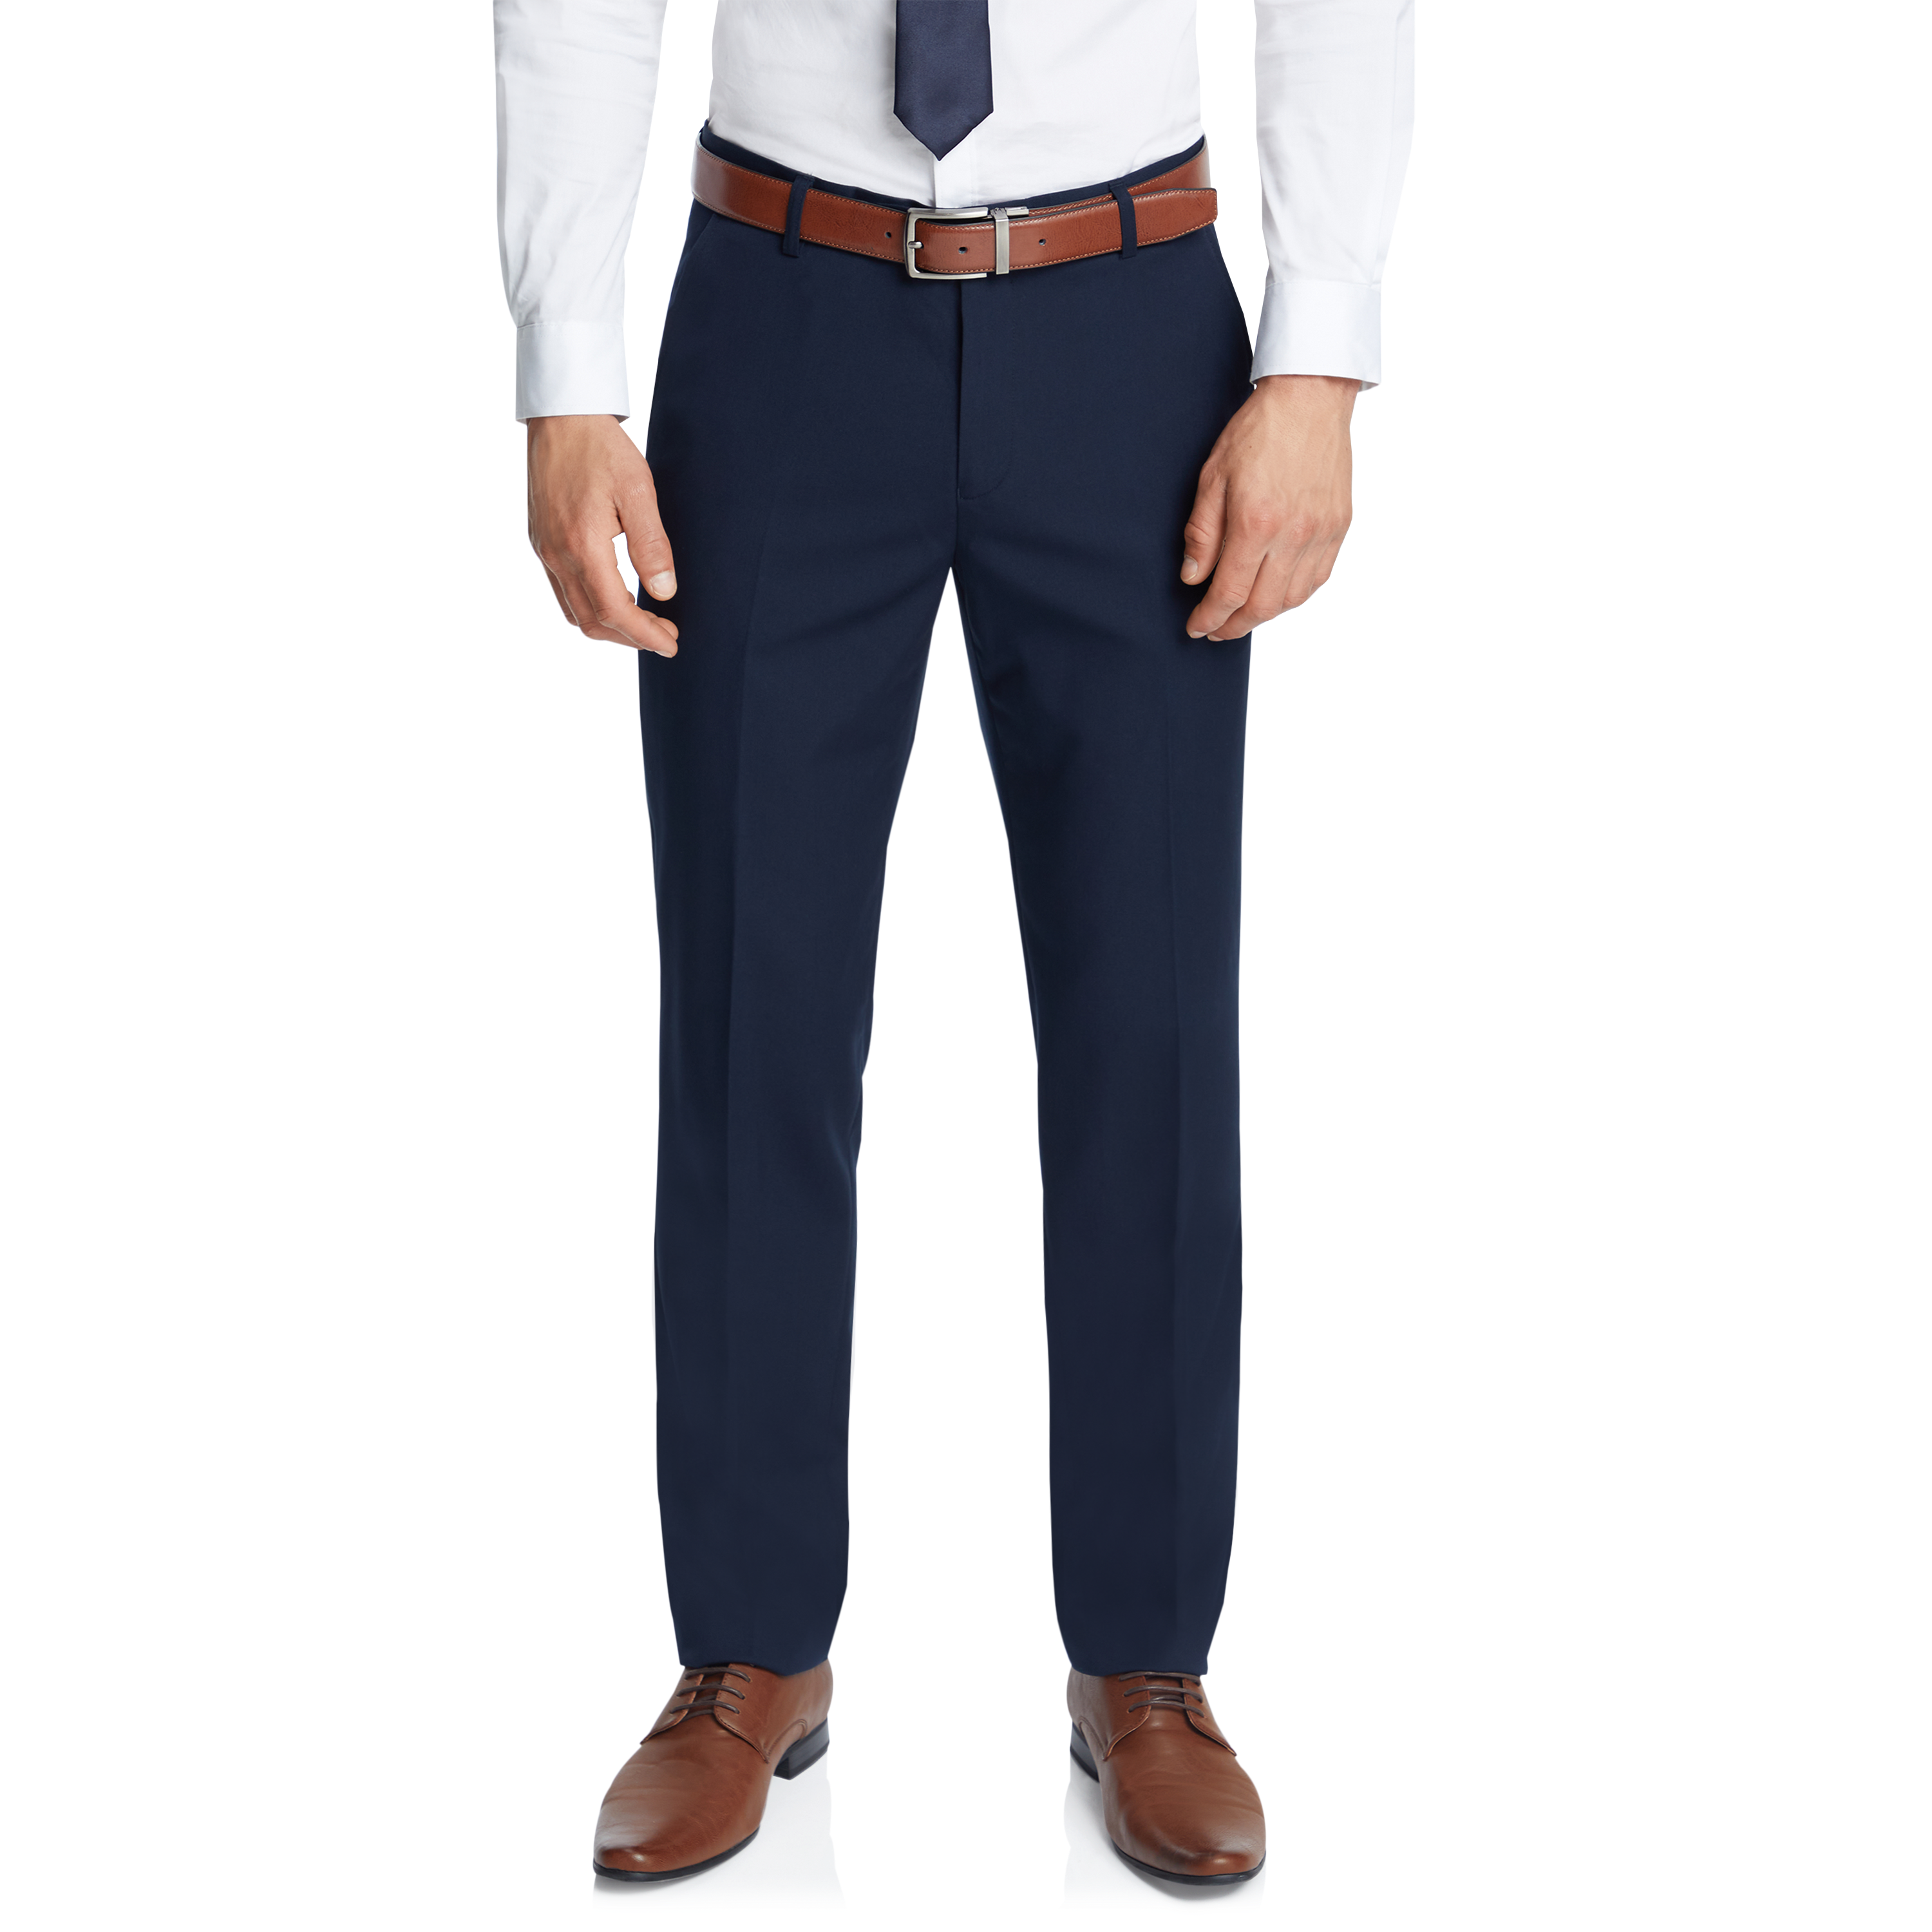 MANCREW Formal Pants for men - Formal Trousers Combo - Cream, Navy Blue